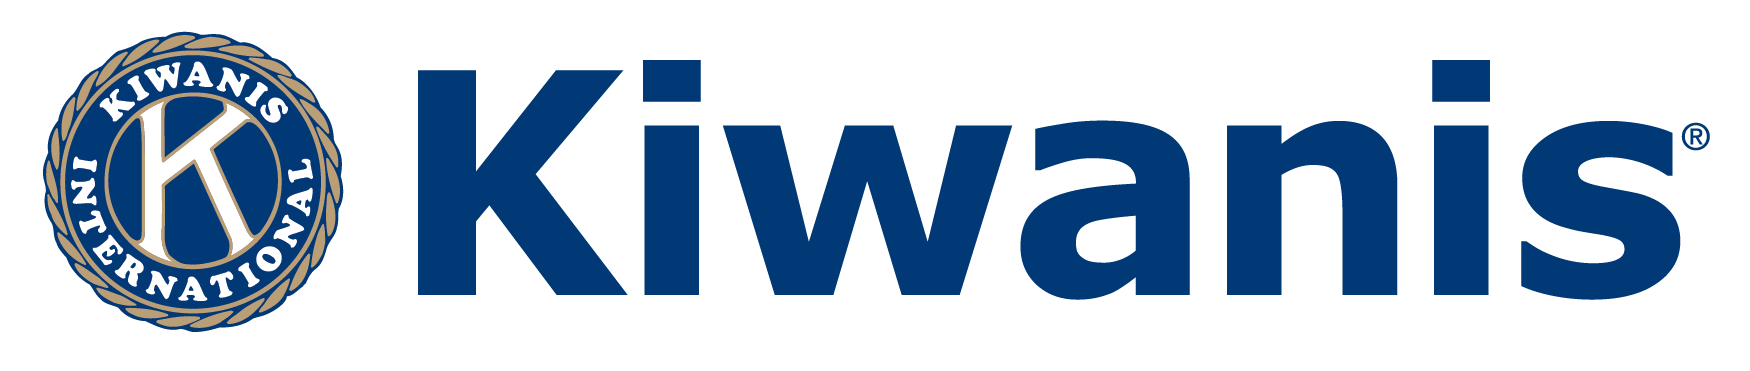 Kiwanis International Logo - Boardable Partnership Opportunity for Kiwanis Agencies